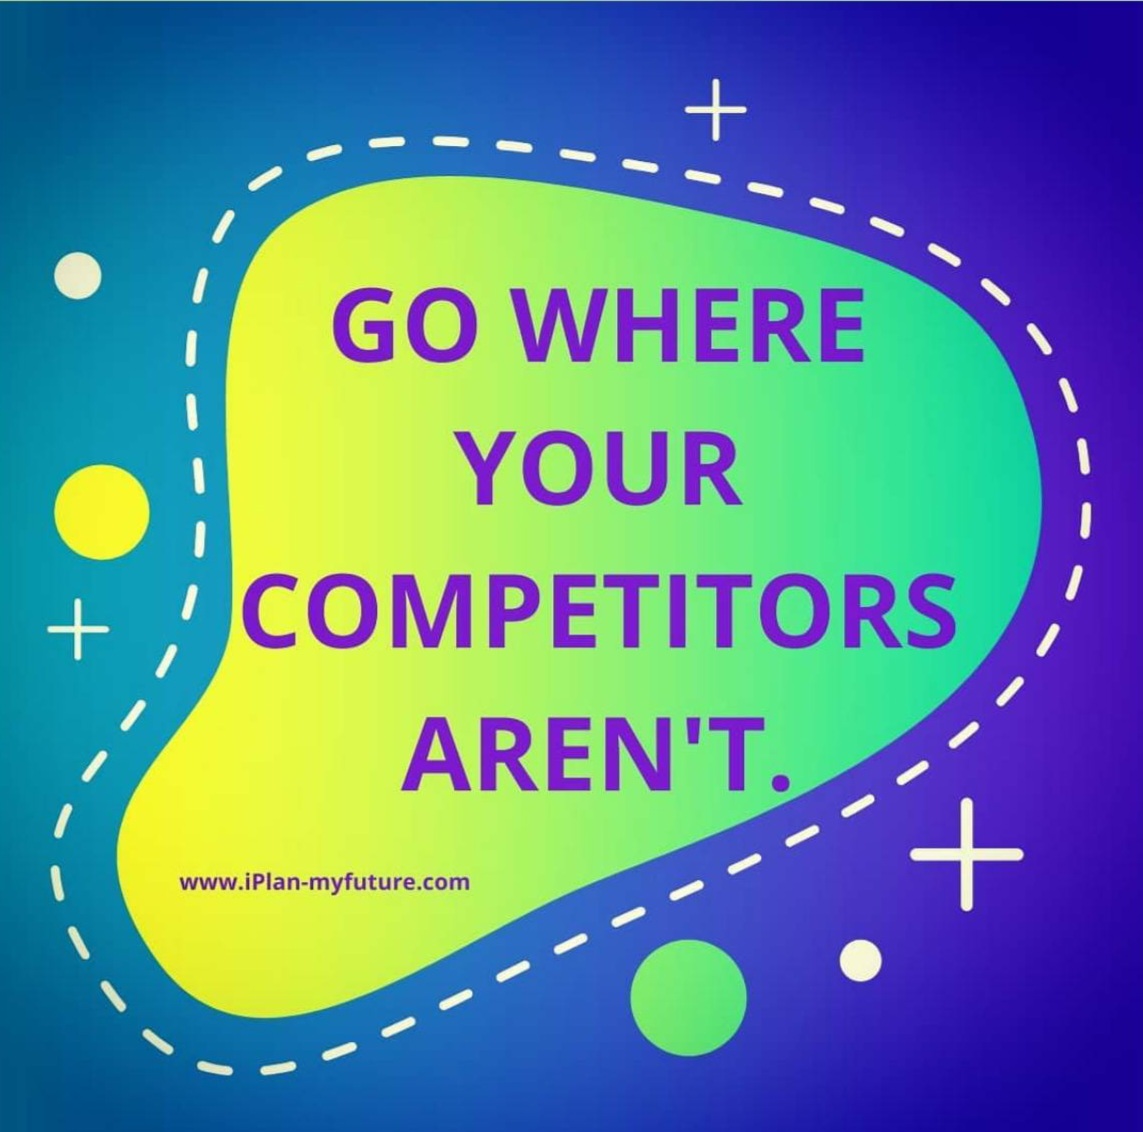 Go where your competitors aren't. 

#iplanmyfuture #hustle #bestquotesfromiplanmyfuture #successTRAIN #ThriveTogether #defstar5  #mpgvip #makeyourownlane #makeithappen #mondaymotivation #mondaythoughts iPlan-myfuture.com